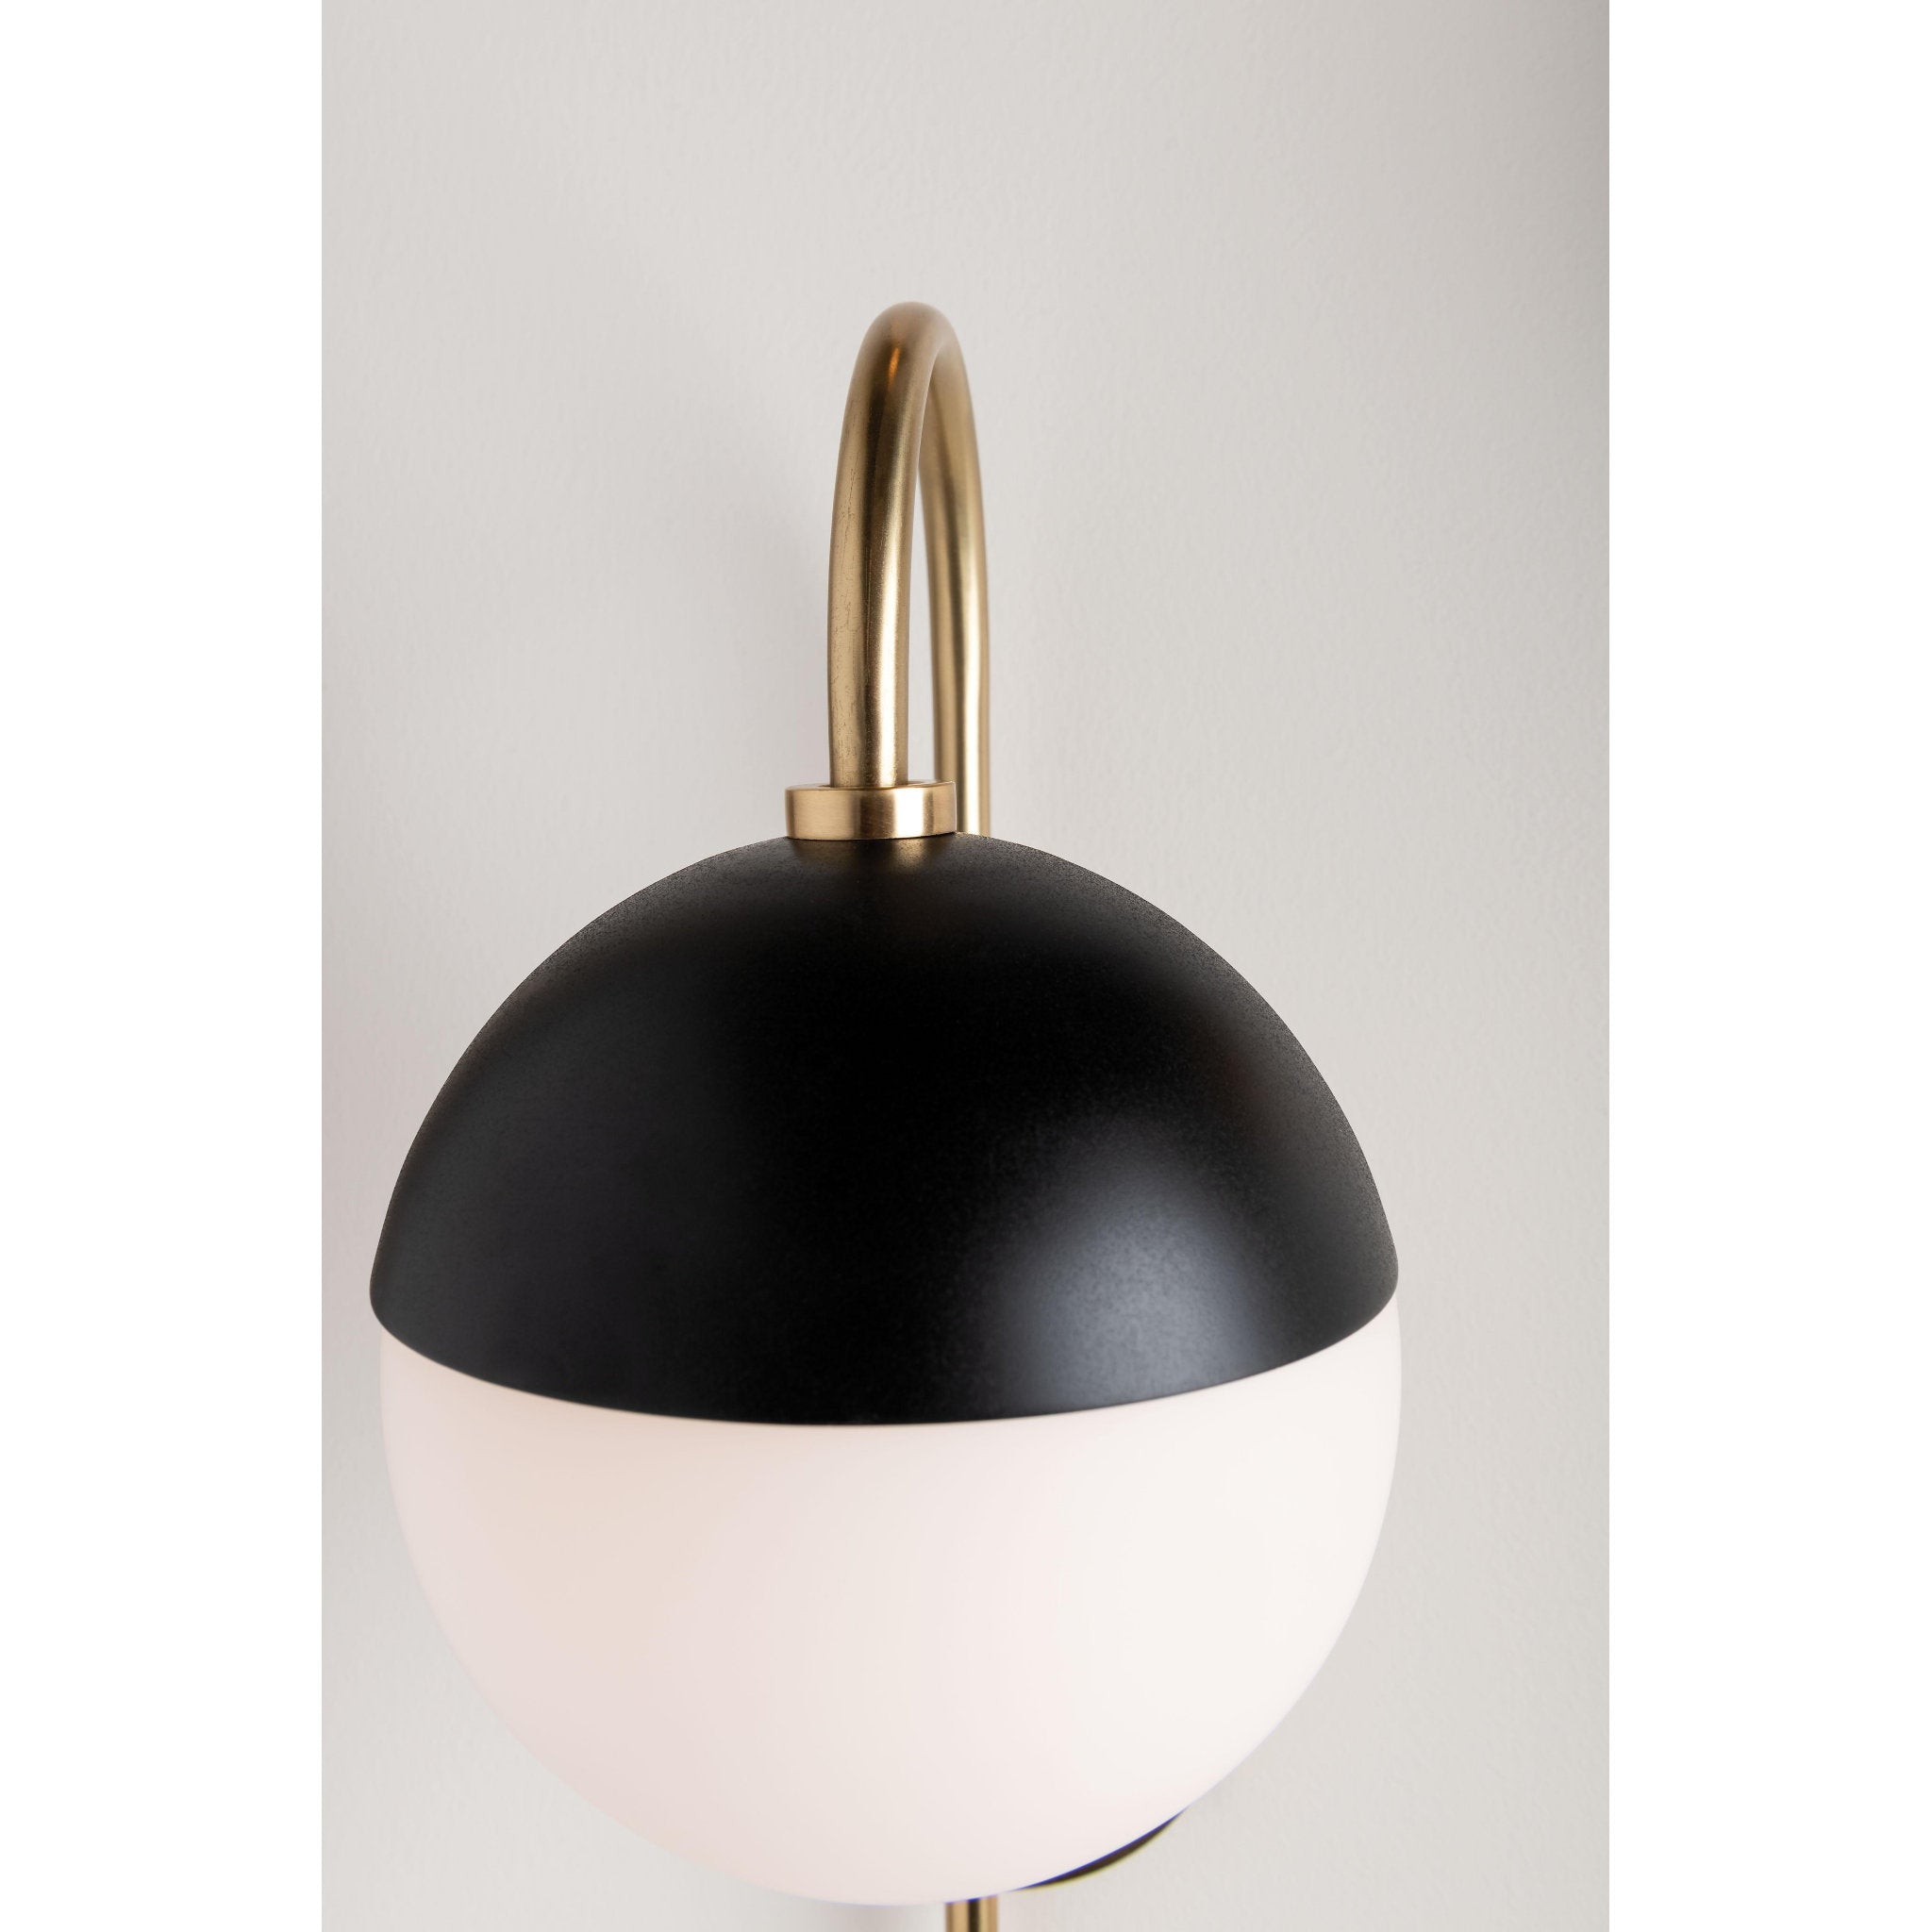 Renee 1-Light Plug-in Sconce in Aged Brass/Black